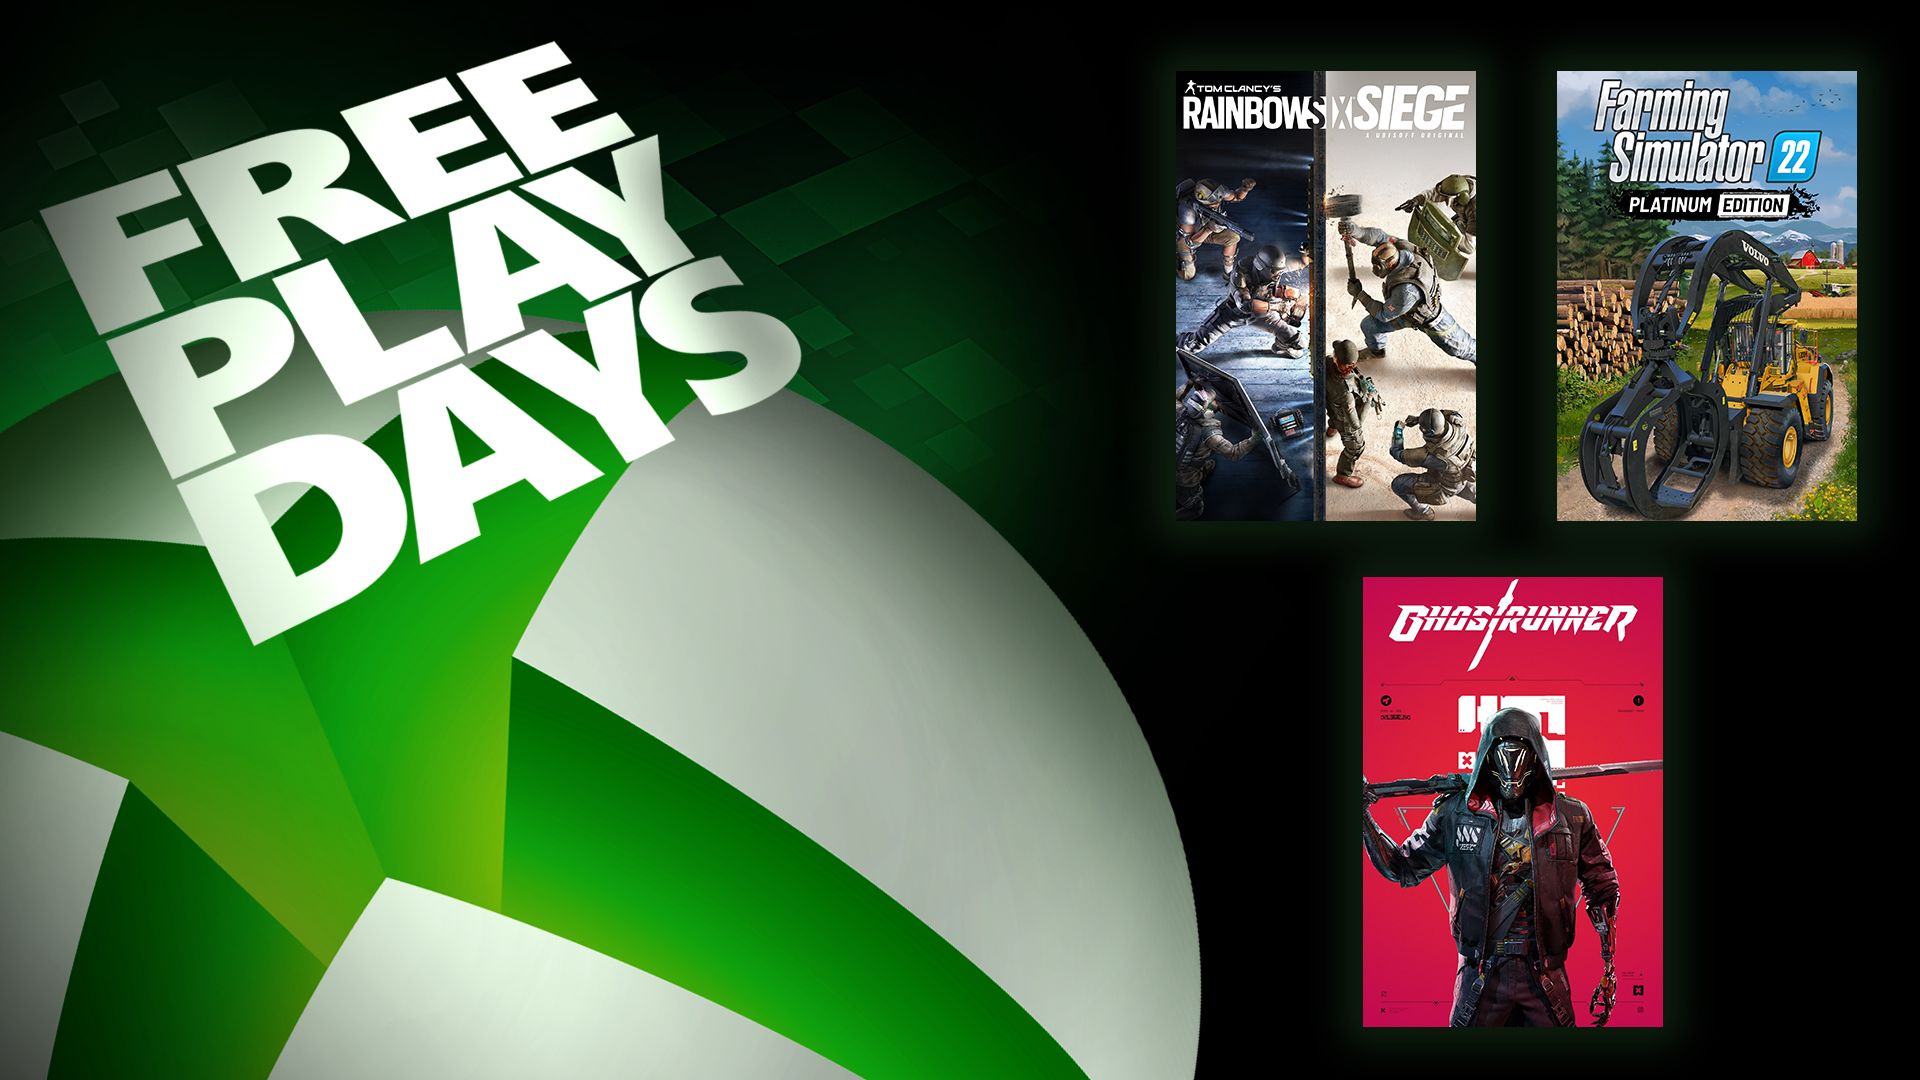 Missionær Geografi vask Free Play Days – Tom Clancy's Rainbow Six Siege, Farming Simulator 22:  Platinum Edition, and Ghostrunner - Xbox Wire